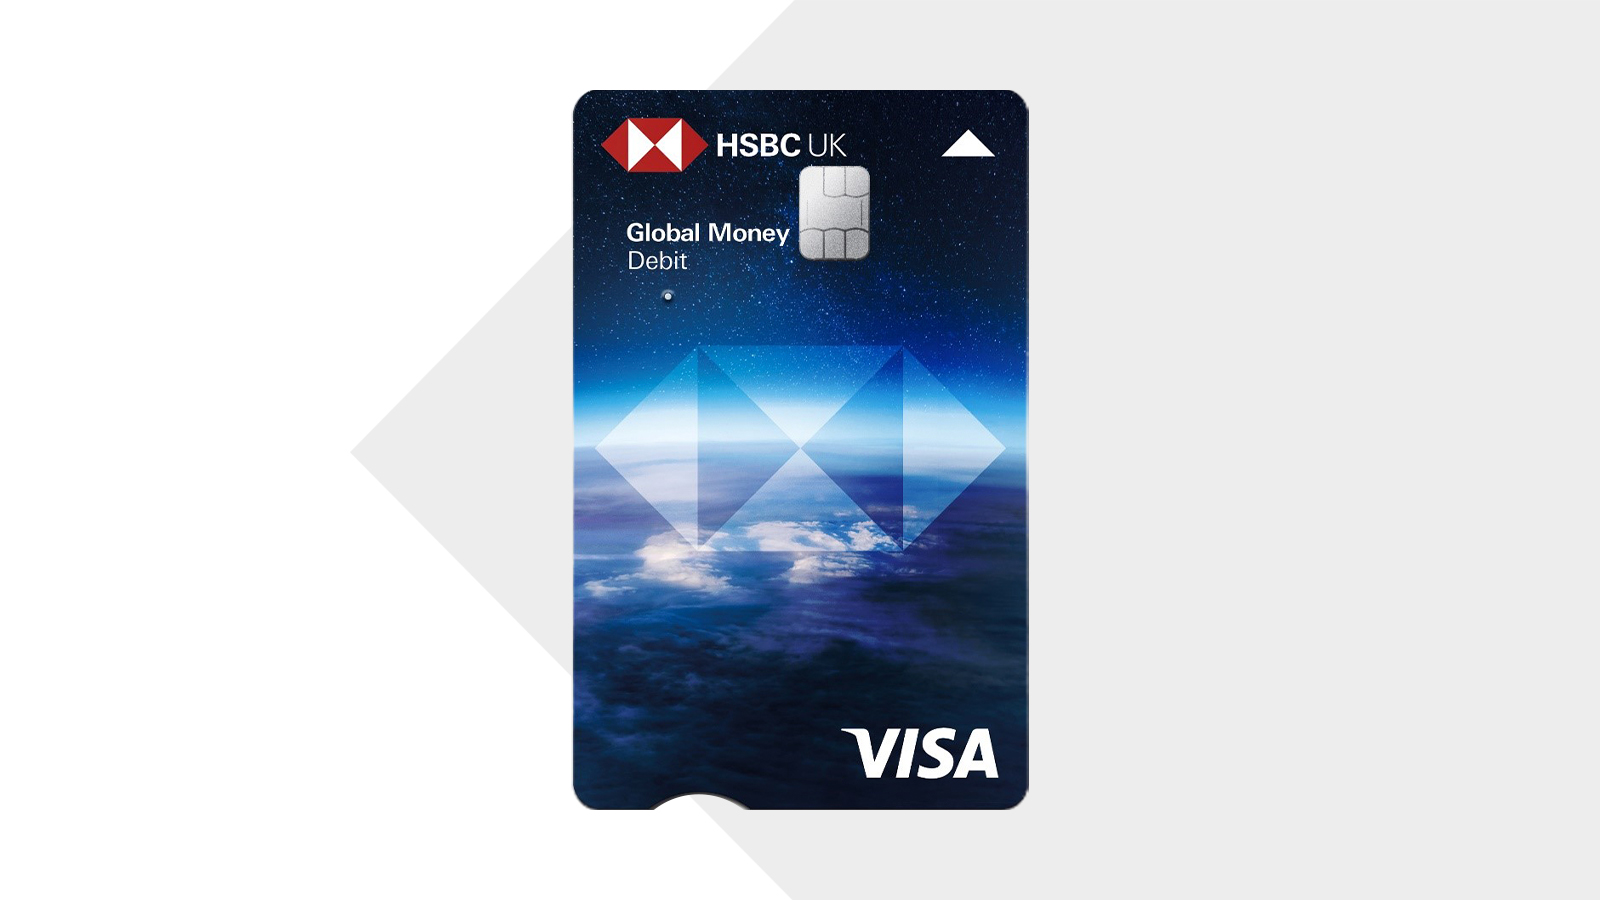 HSBC UK Global Money Debit card